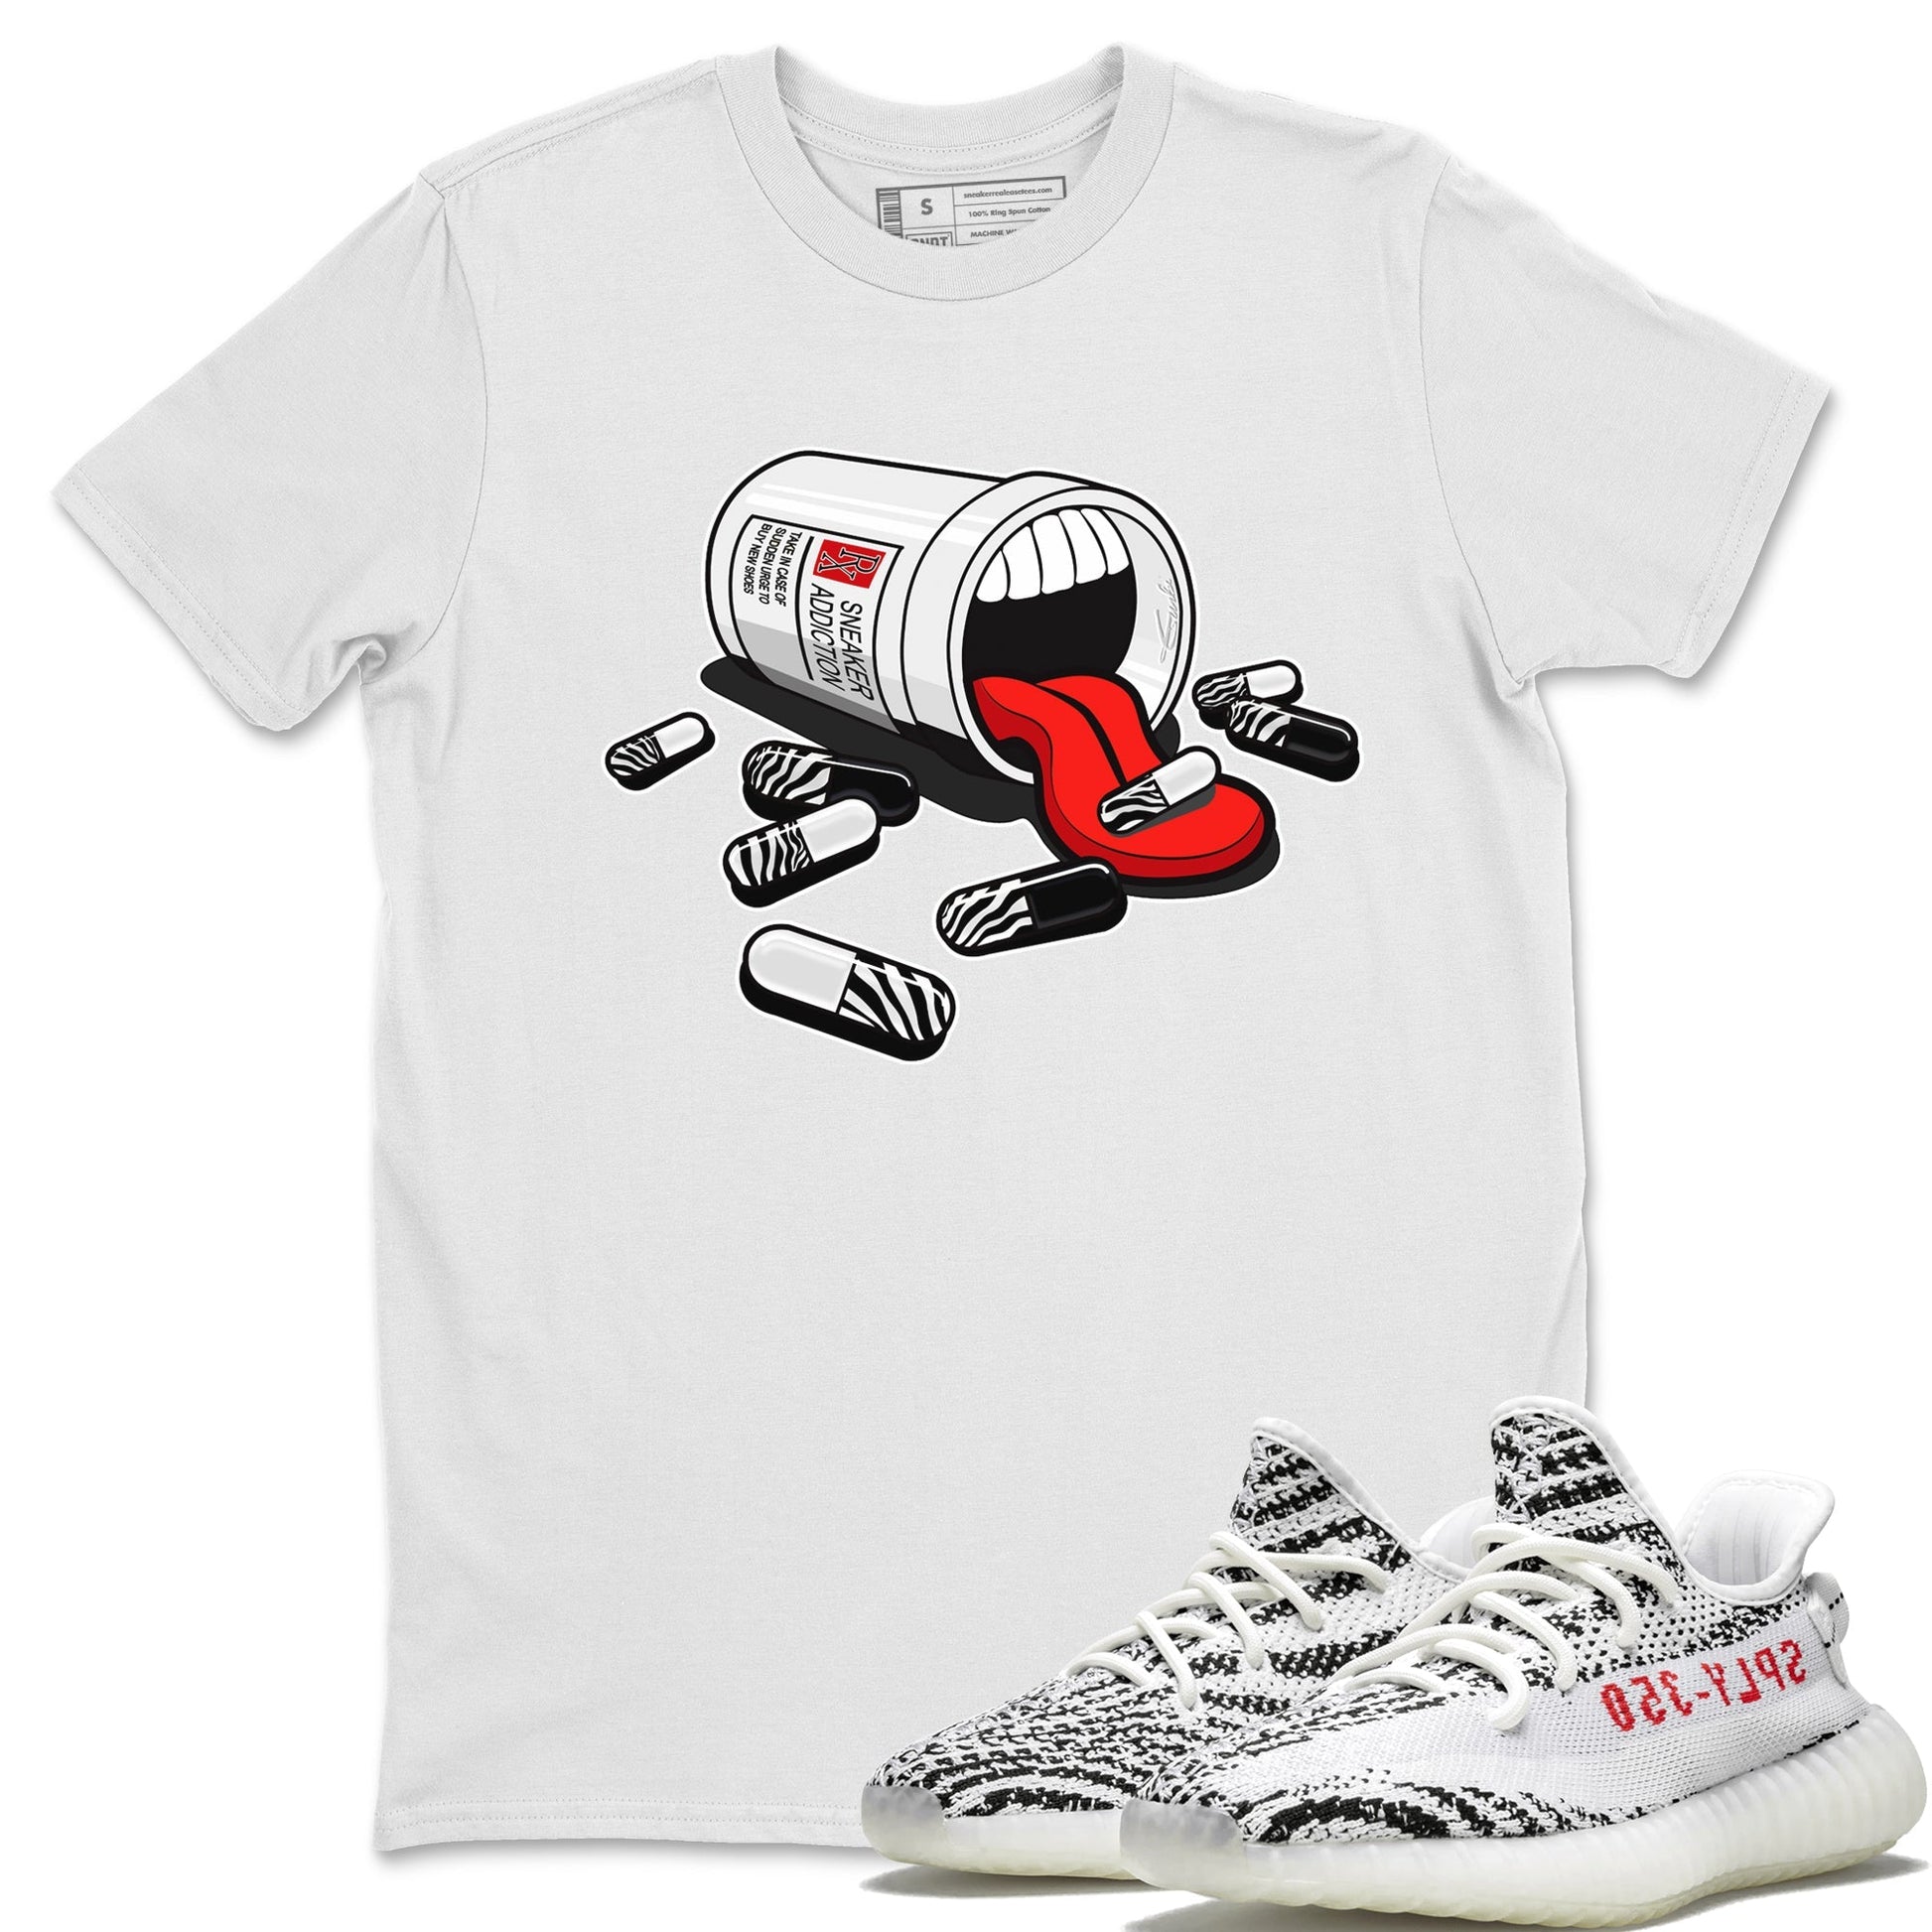 Yeezy 350 Zebra Sneaker Match Tees Sneaker Addiction Sneaker Tees Yeezy 350 Zebra Sneaker Release Tees Unisex Shirts